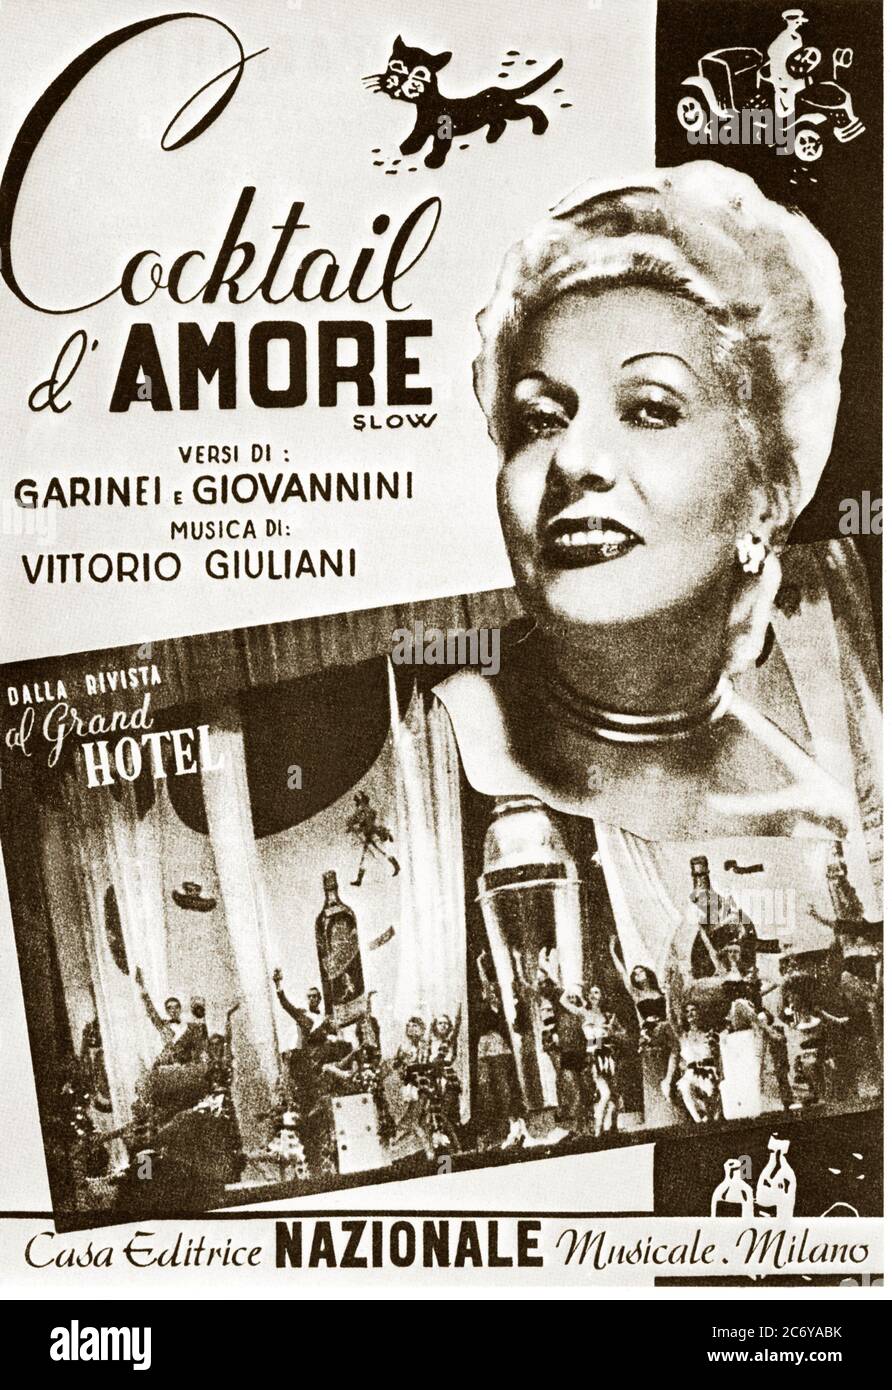 1948 , ITALY  : The celebrated italian Gay Icon , singer and soubrette  WANDA OSIRIS ( 1905 - 1994 ) , queen of italian Teatro di Rivista from 30's to 50's , theatre patner of Totò , Dapporto , Macario and Alberto Sordi . Shetmusic cover for song COCKTAIL D' AMORE by Garinei & Giovannini , music by Vittorio Giuliani  for the Rivista Musicale AL GRAND HOTEL , performed in tour around Italy in  1948 .- CANTANTE - TEATRO - THEATRE - copertina di spartito musicale - radio days - MUSICAL  - LGBT - CAMP culture - GAY INTEREST ---  Archivio GBB Stock Photo